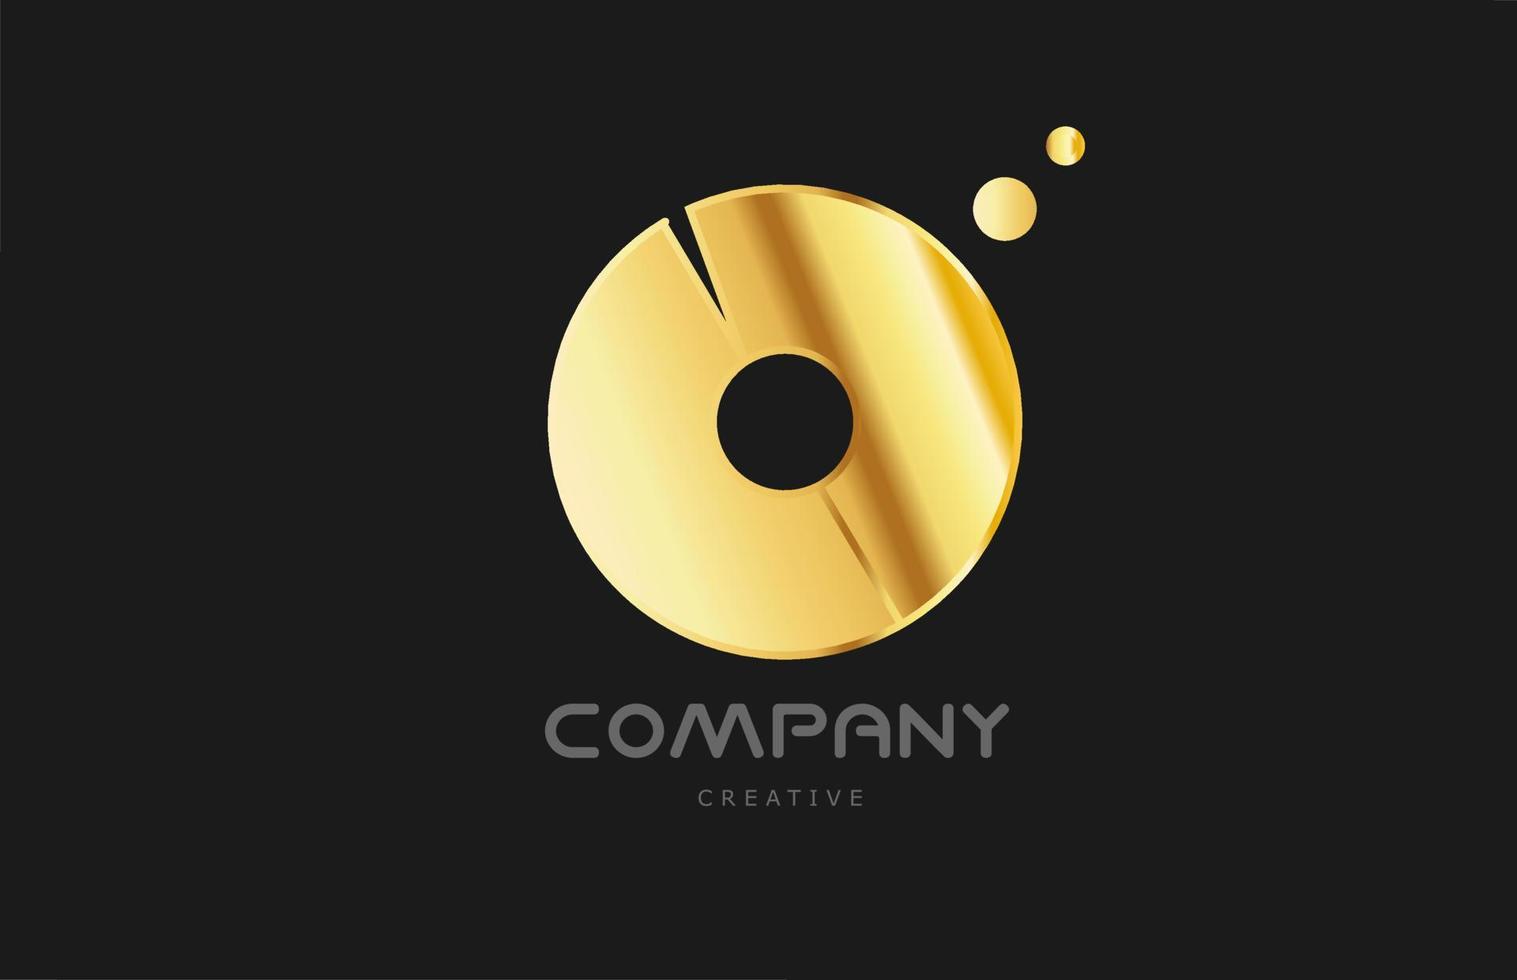 design de ícone do logotipo da letra do alfabeto dourado dourado. modelo criativo para negócios e empresa e na cor amarela vetor